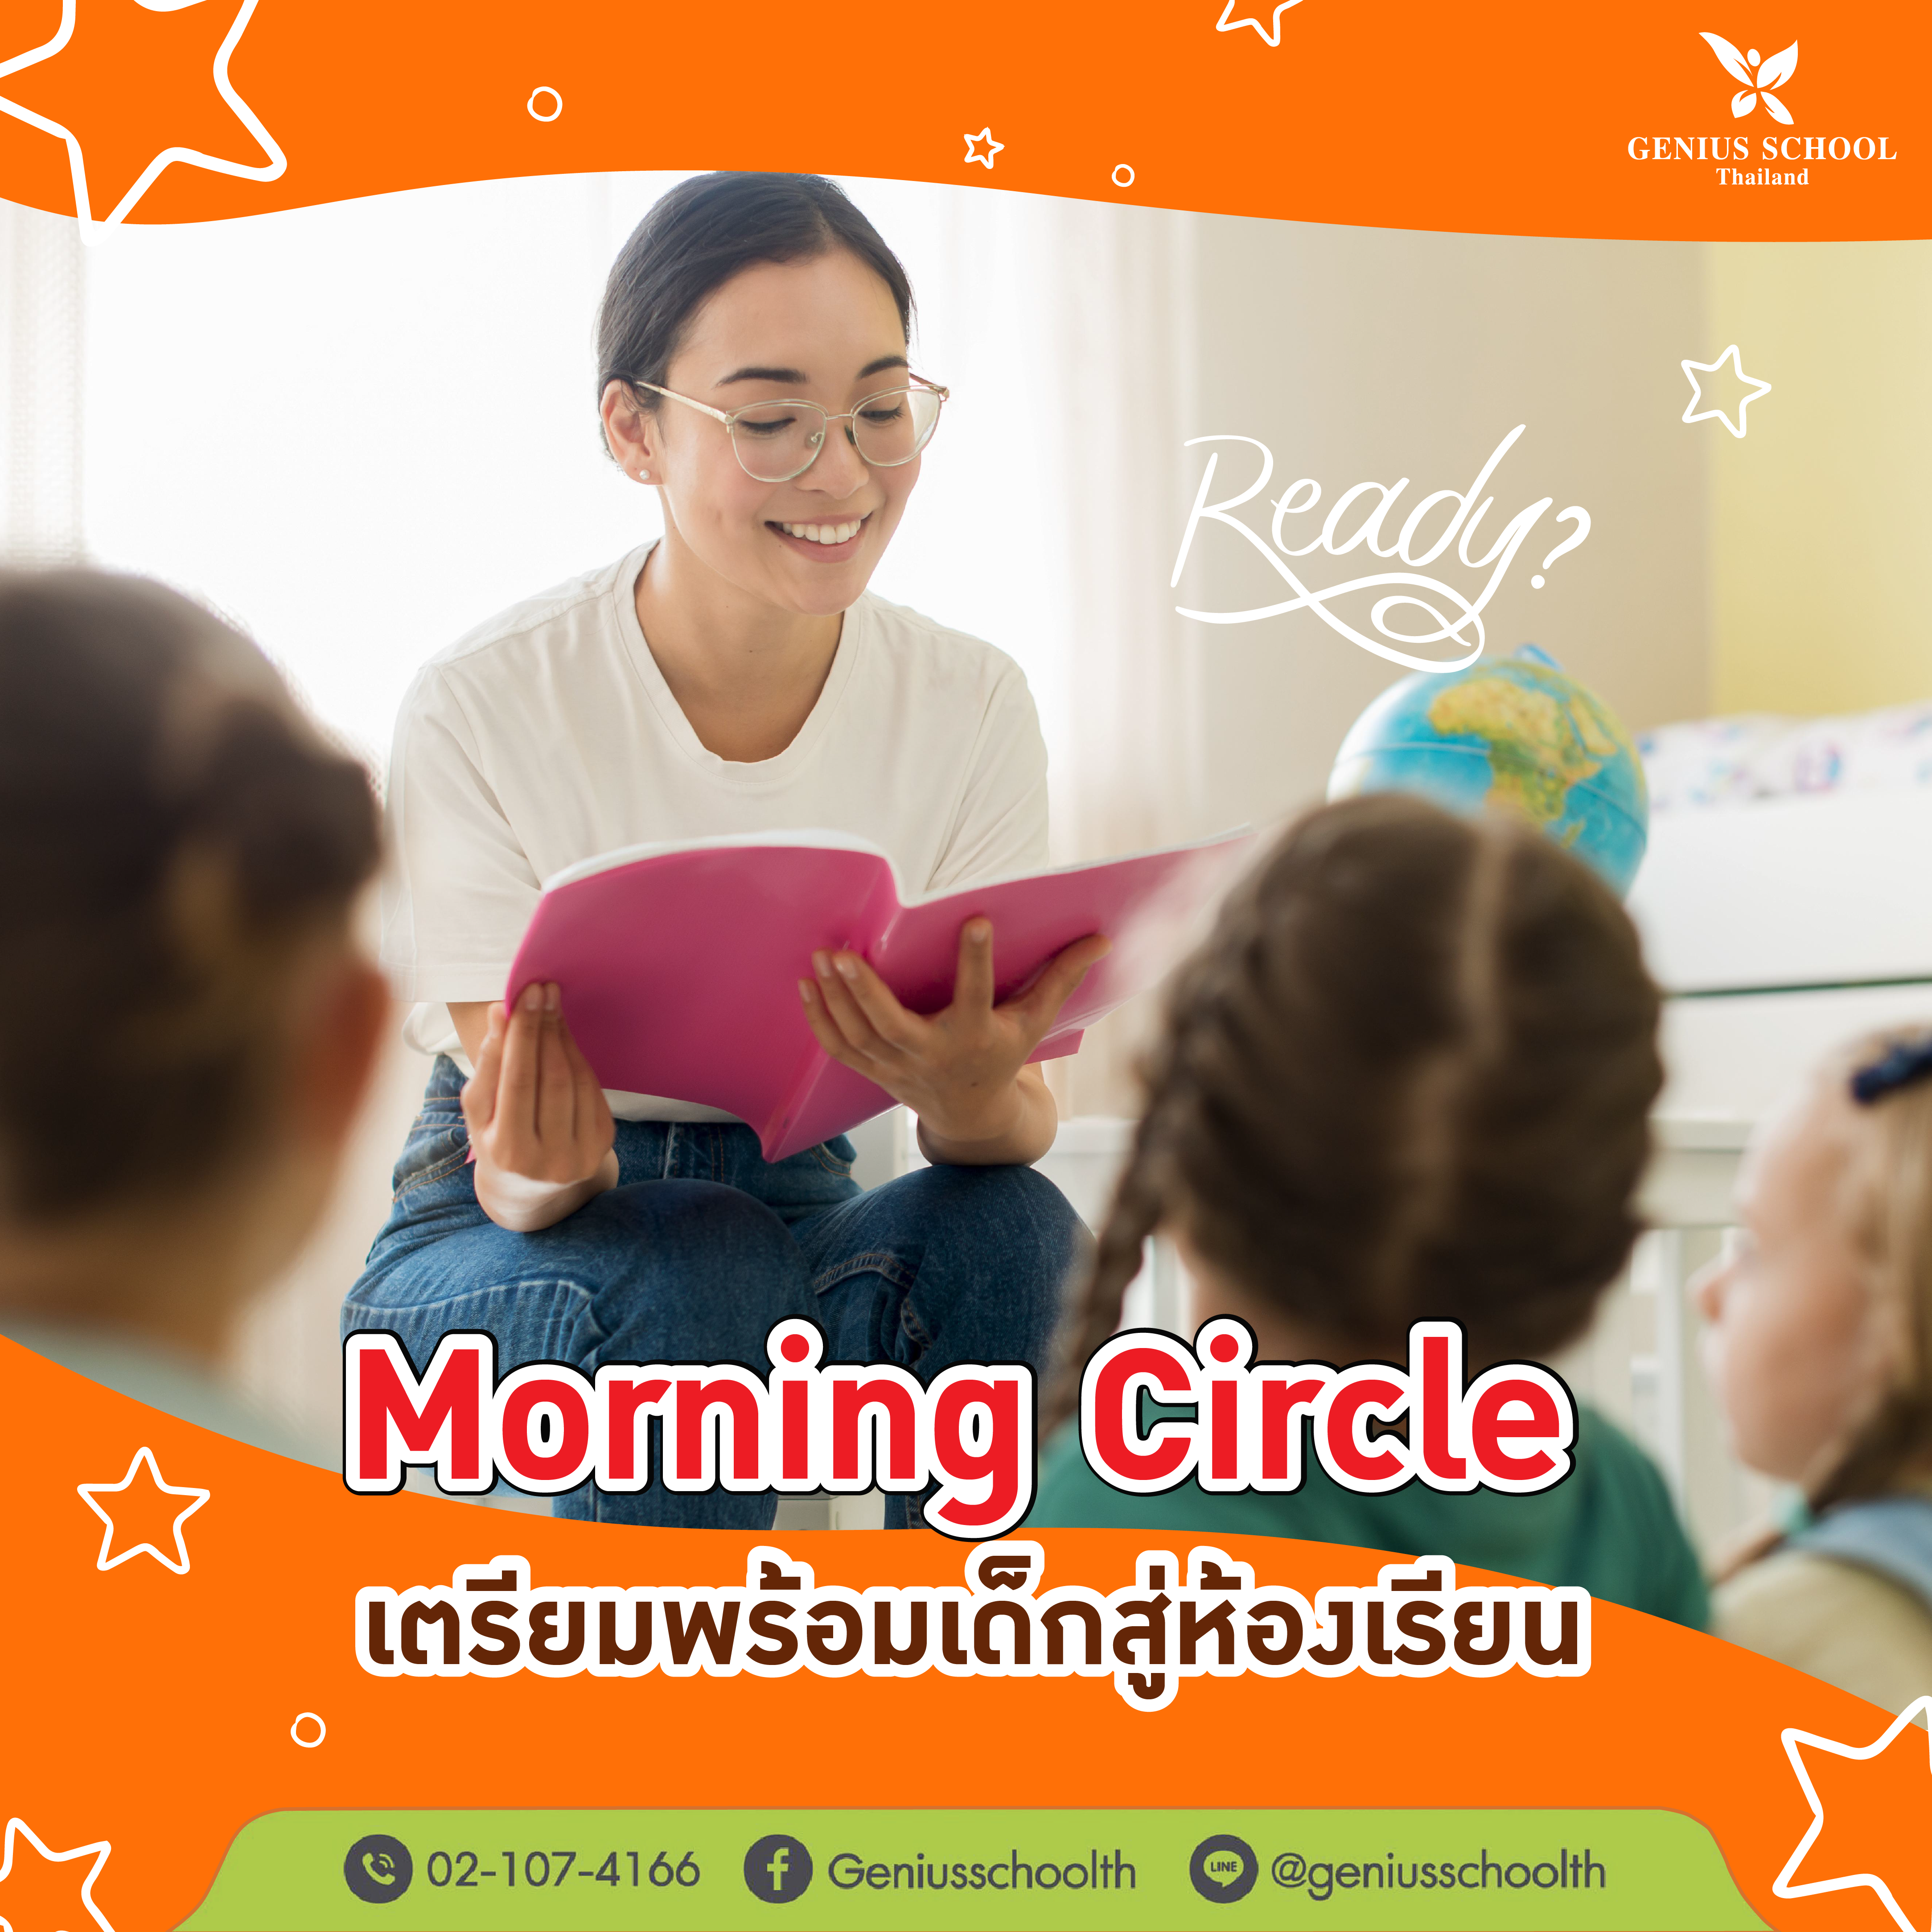 <h1>Morning Circle เตรียมพร้อมเด็กสู่ห้องเรียน ทั้งด้านร่างกายและจิตใจ</h1>